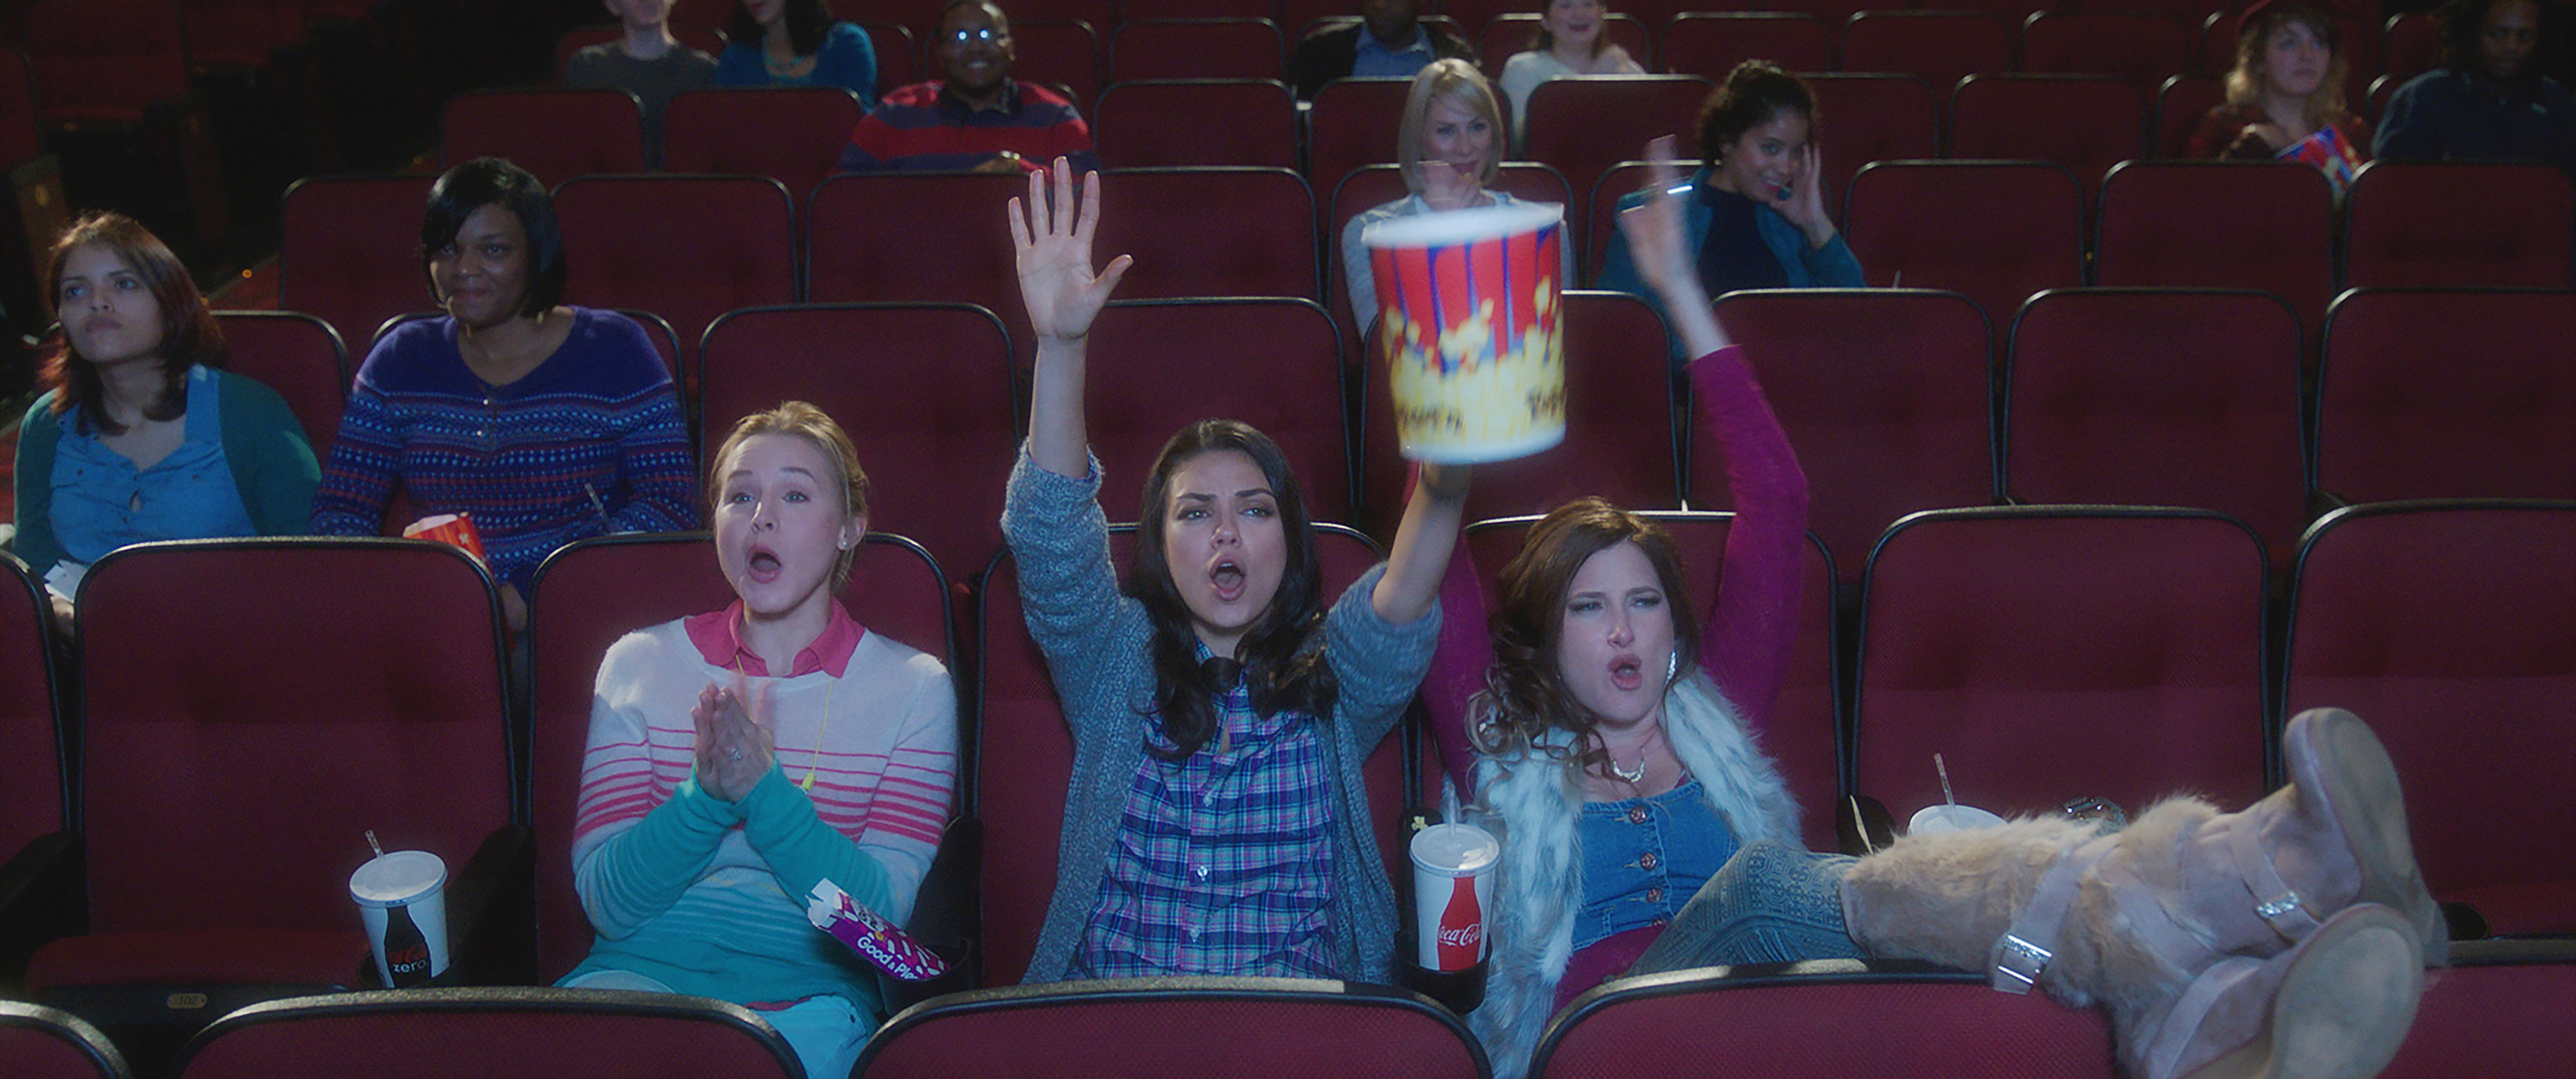 Kristen Bell, Mila Kunis, Kathryn Hahn shouting in a movie theater